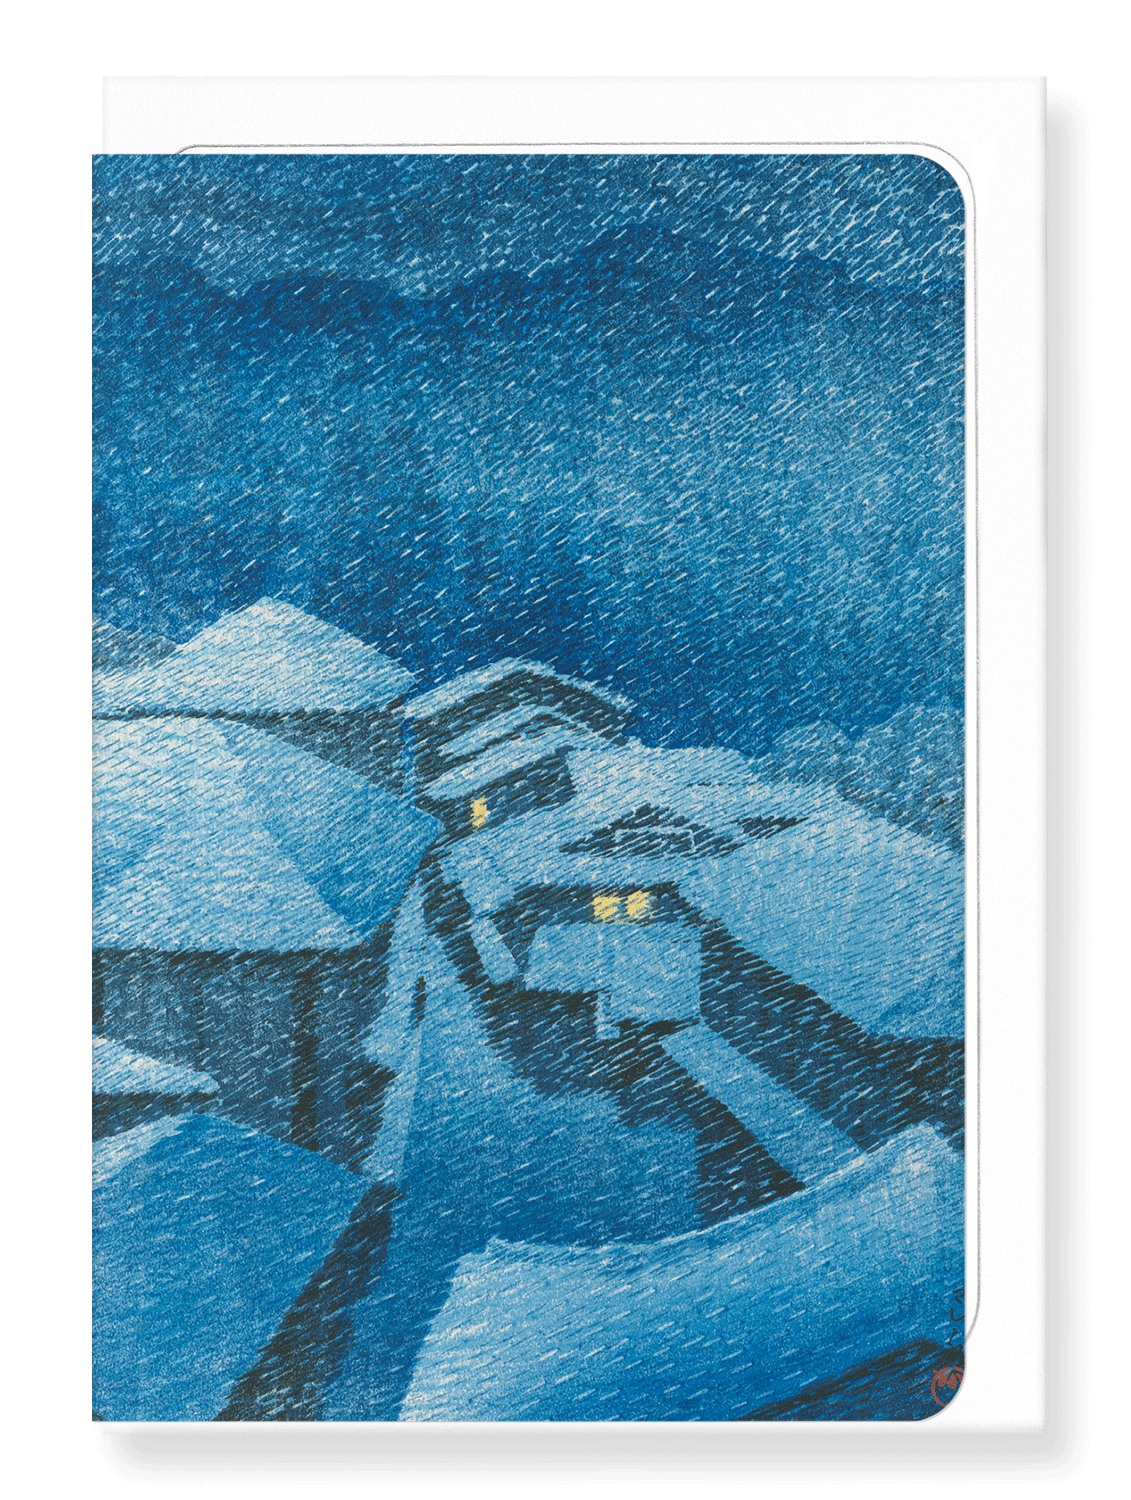 Ezen Designs - Shiobara in snowstorm - Greeting Card - Front